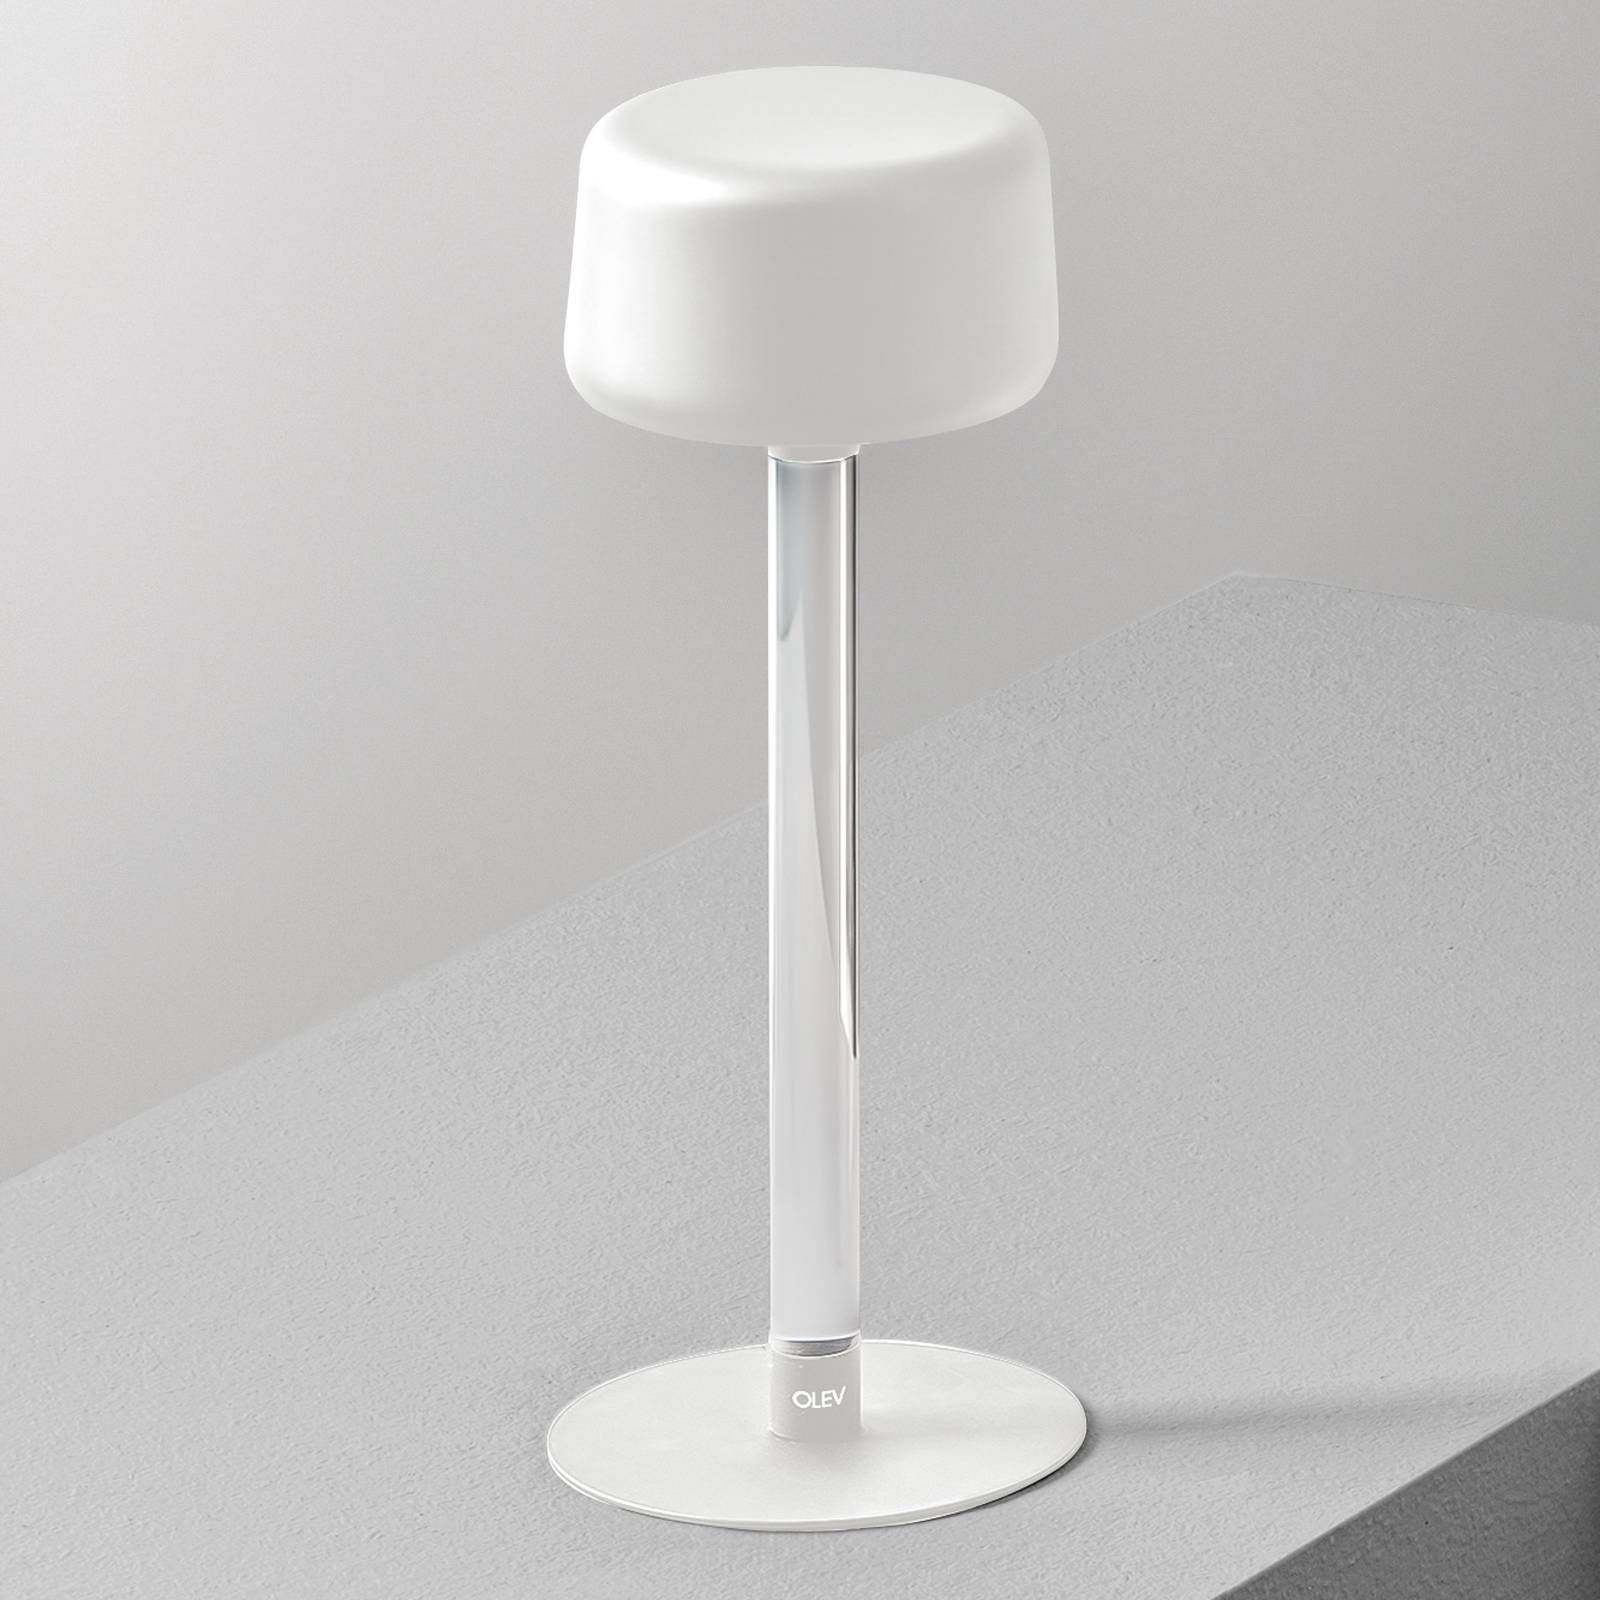 OleV OLEV Tee dizajnérska stolná lampa s batériou biela, Obývacia izba / jedáleň, hliník, plexisklo, 2W, K: 30.6cm